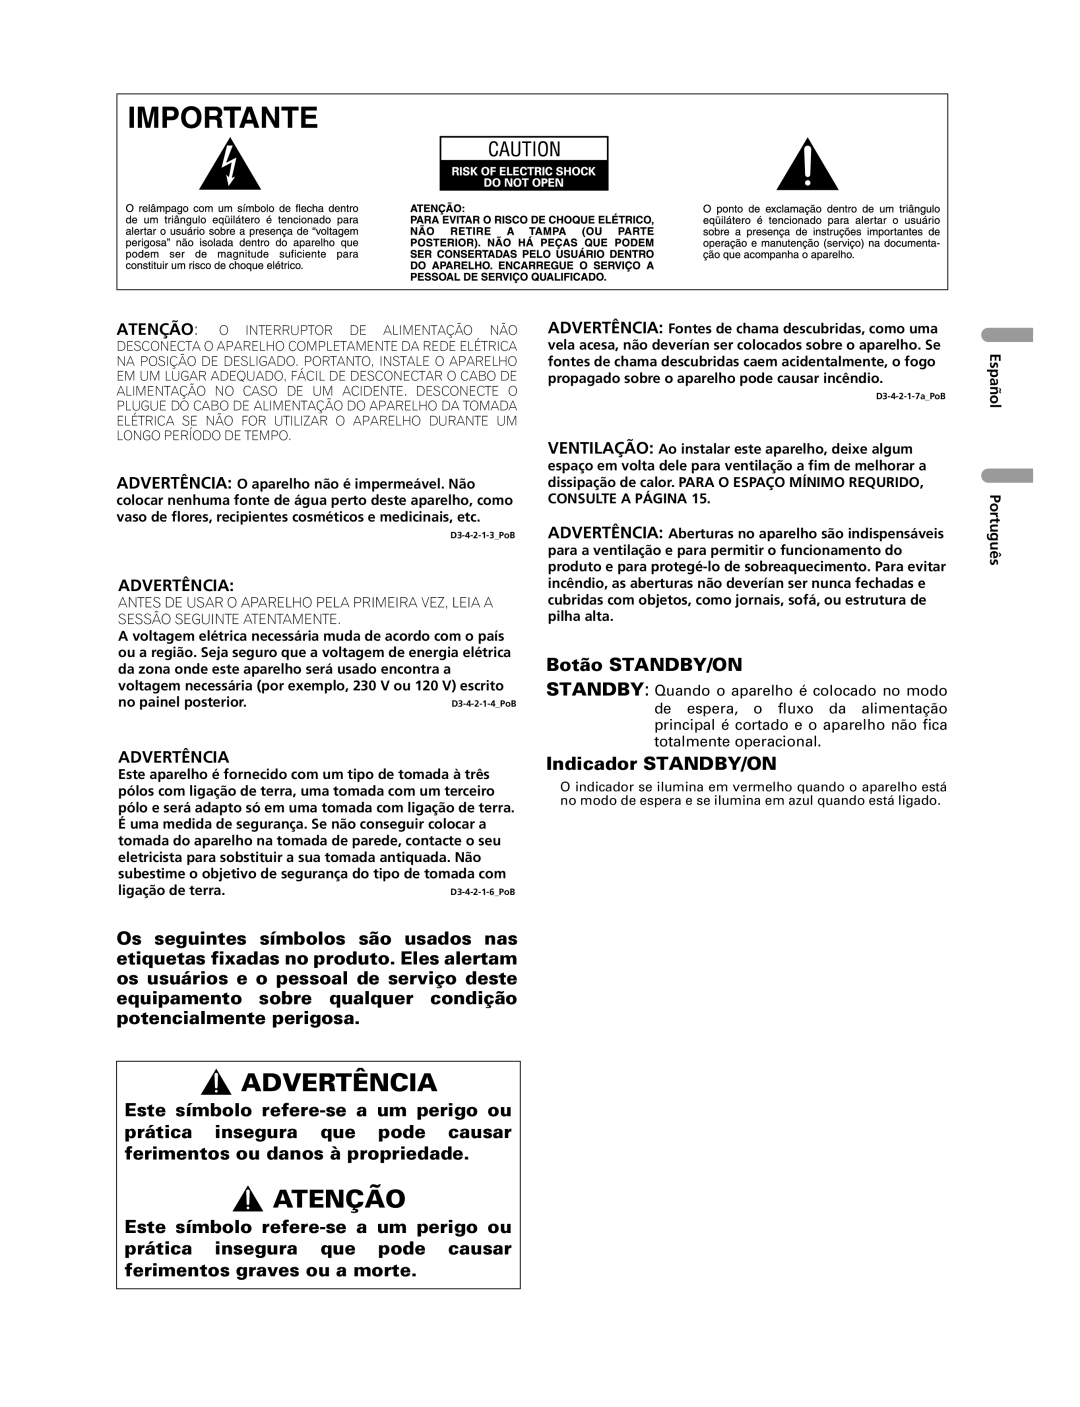 Pioneer PDP-507XG, PDP-427XG manual Advertência, Atenção, Botão STANDBY/ON, Español Português, Indicador STANDBY/ON 